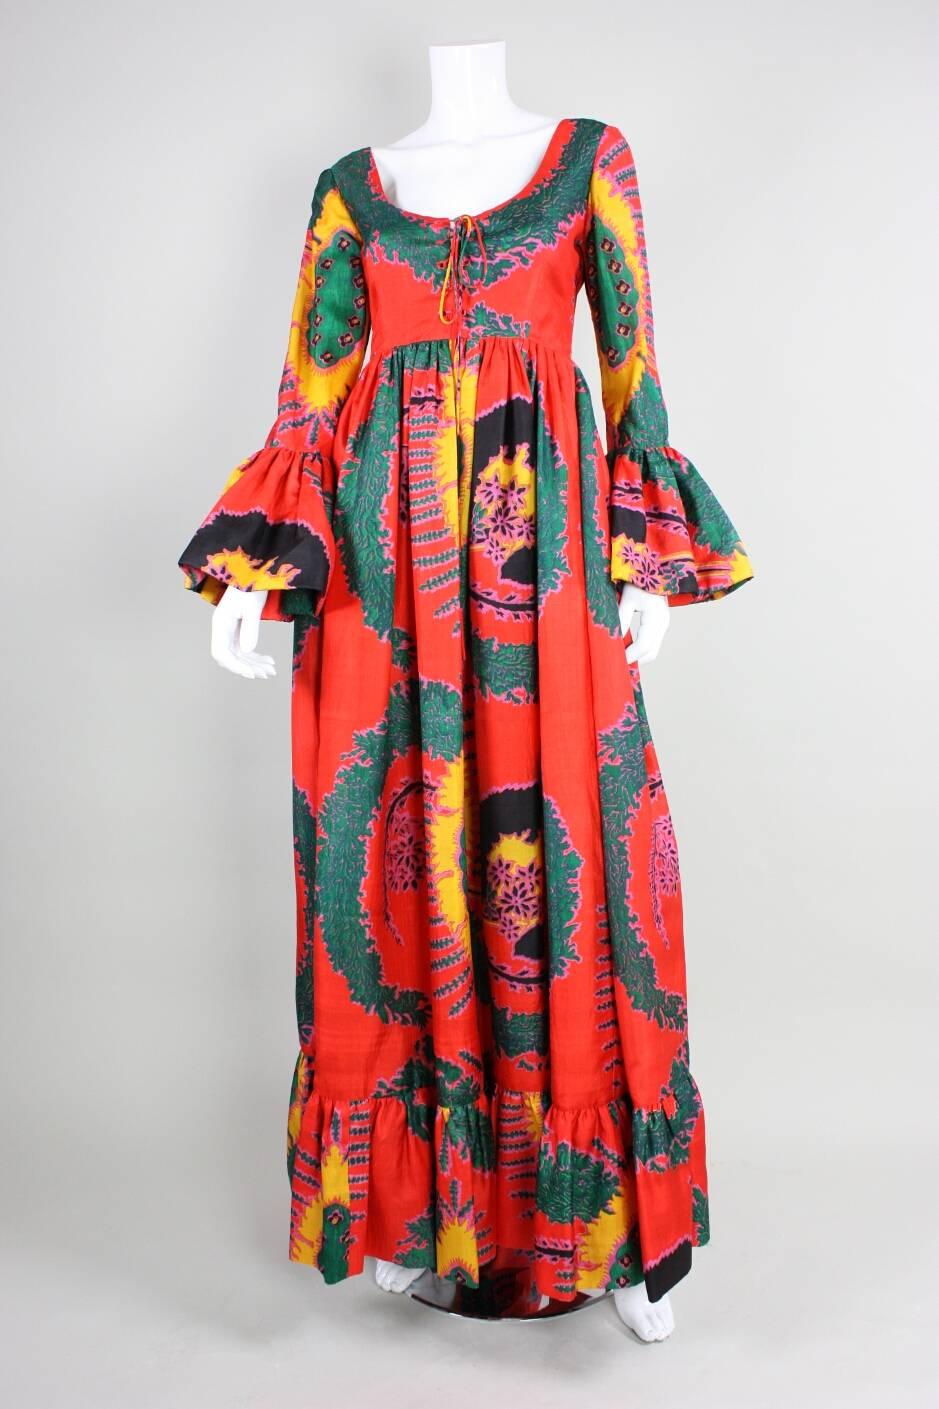 1970's Geoffrey Beene Printed Silk Gown

Bust: 36"
Waist: 26 1/2"
Hips: Open
Across Shoulders: 16 1/2"
Sleeve Length: 24"
Shoulder Seam to Hem Length: 58"